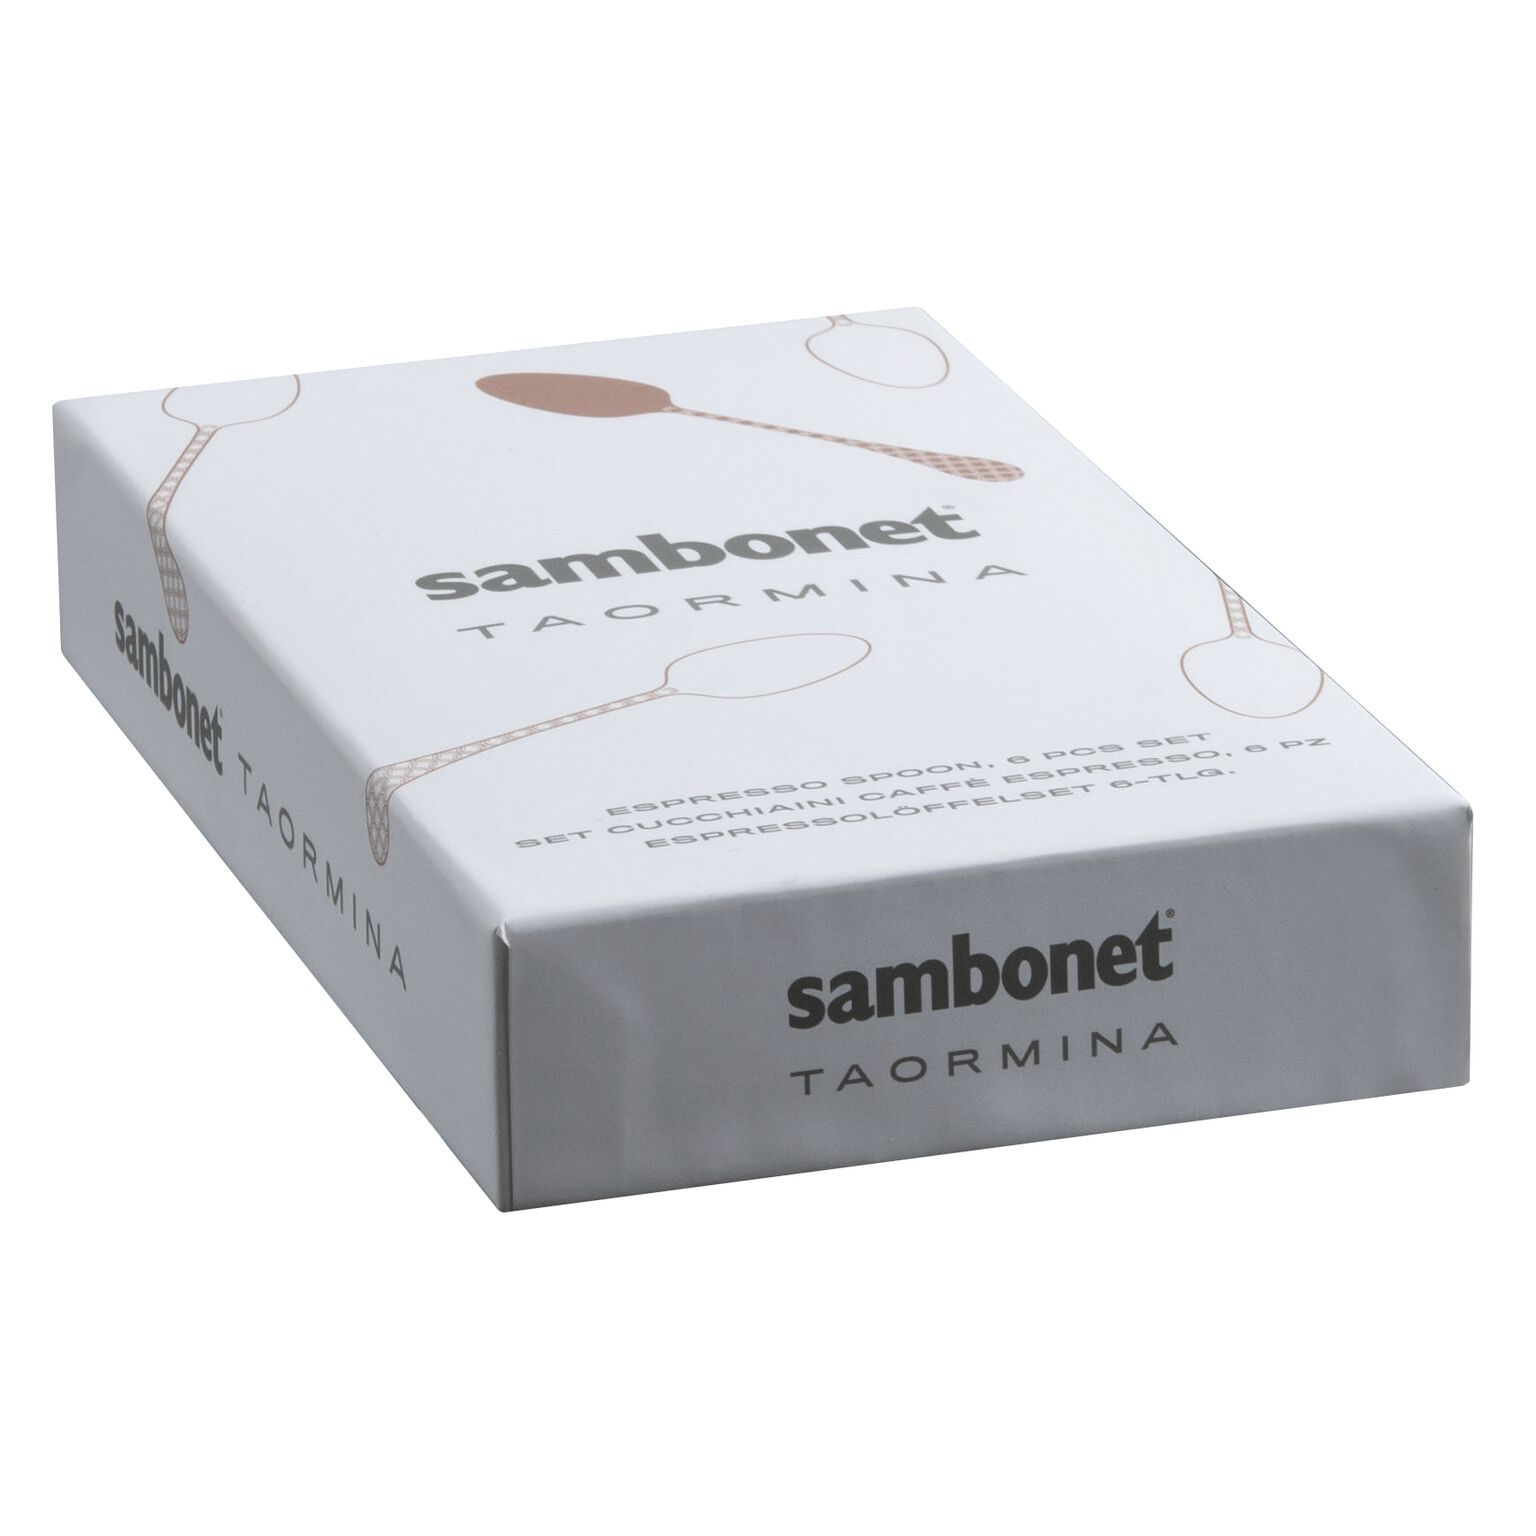 Sambonet Ложка кофейная набор 6 штук Taormina Gold (52766GA7) Sambonet - spb.v-b.ru